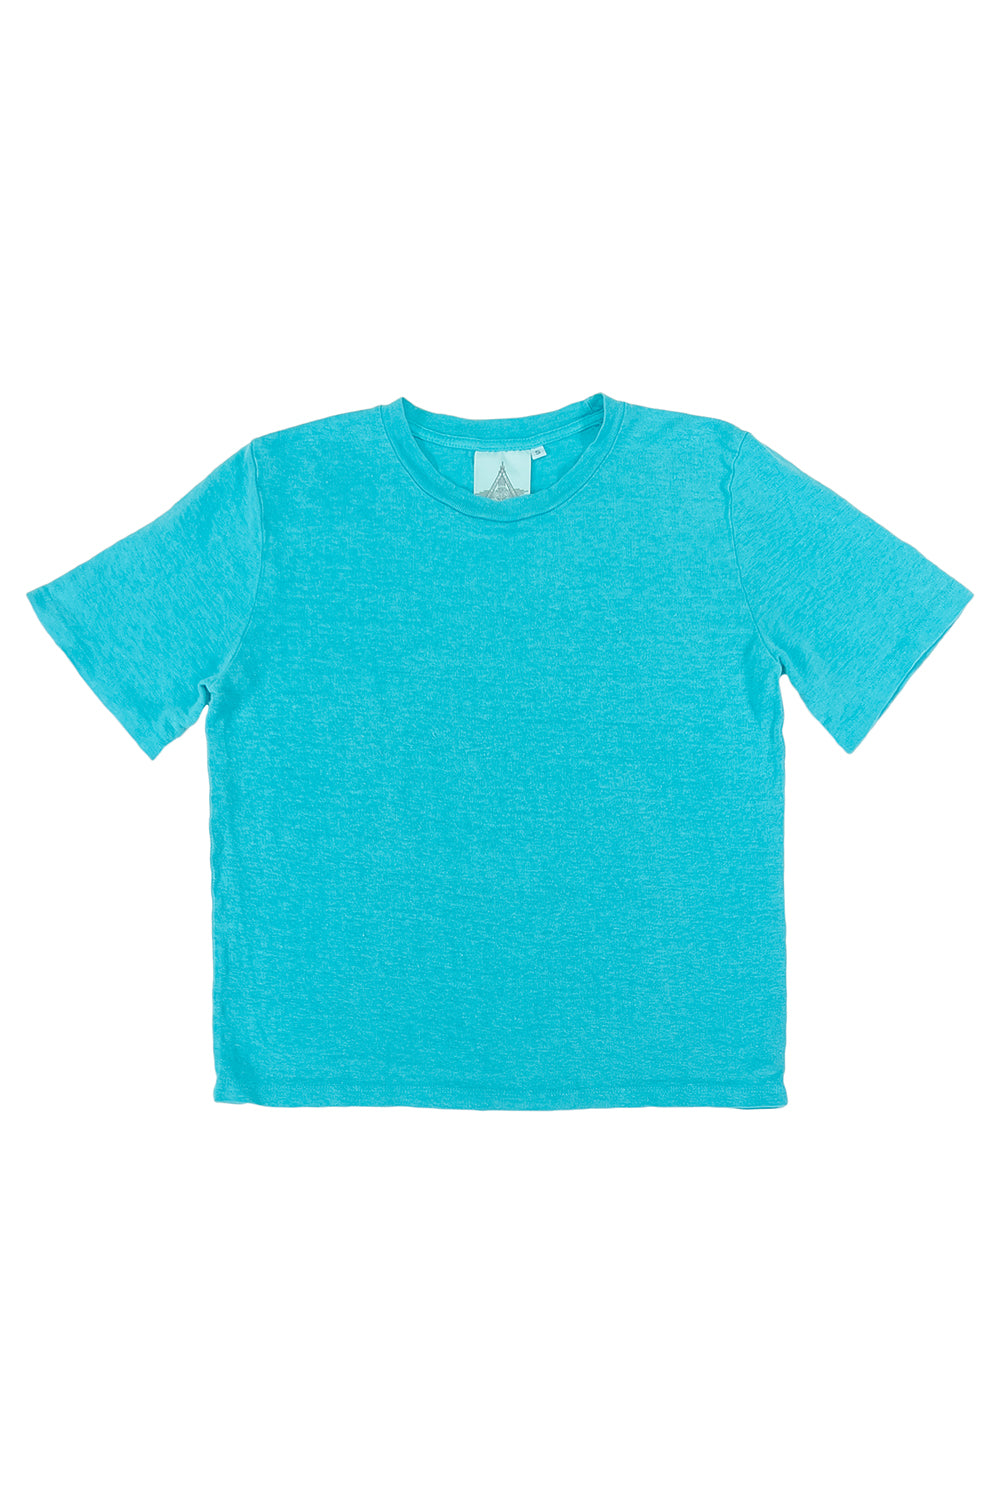 Dakota - 100% Hemp Cropped Tee | Jungmaven Hemp Clothing & Accessories / Color: Caribbean Blue